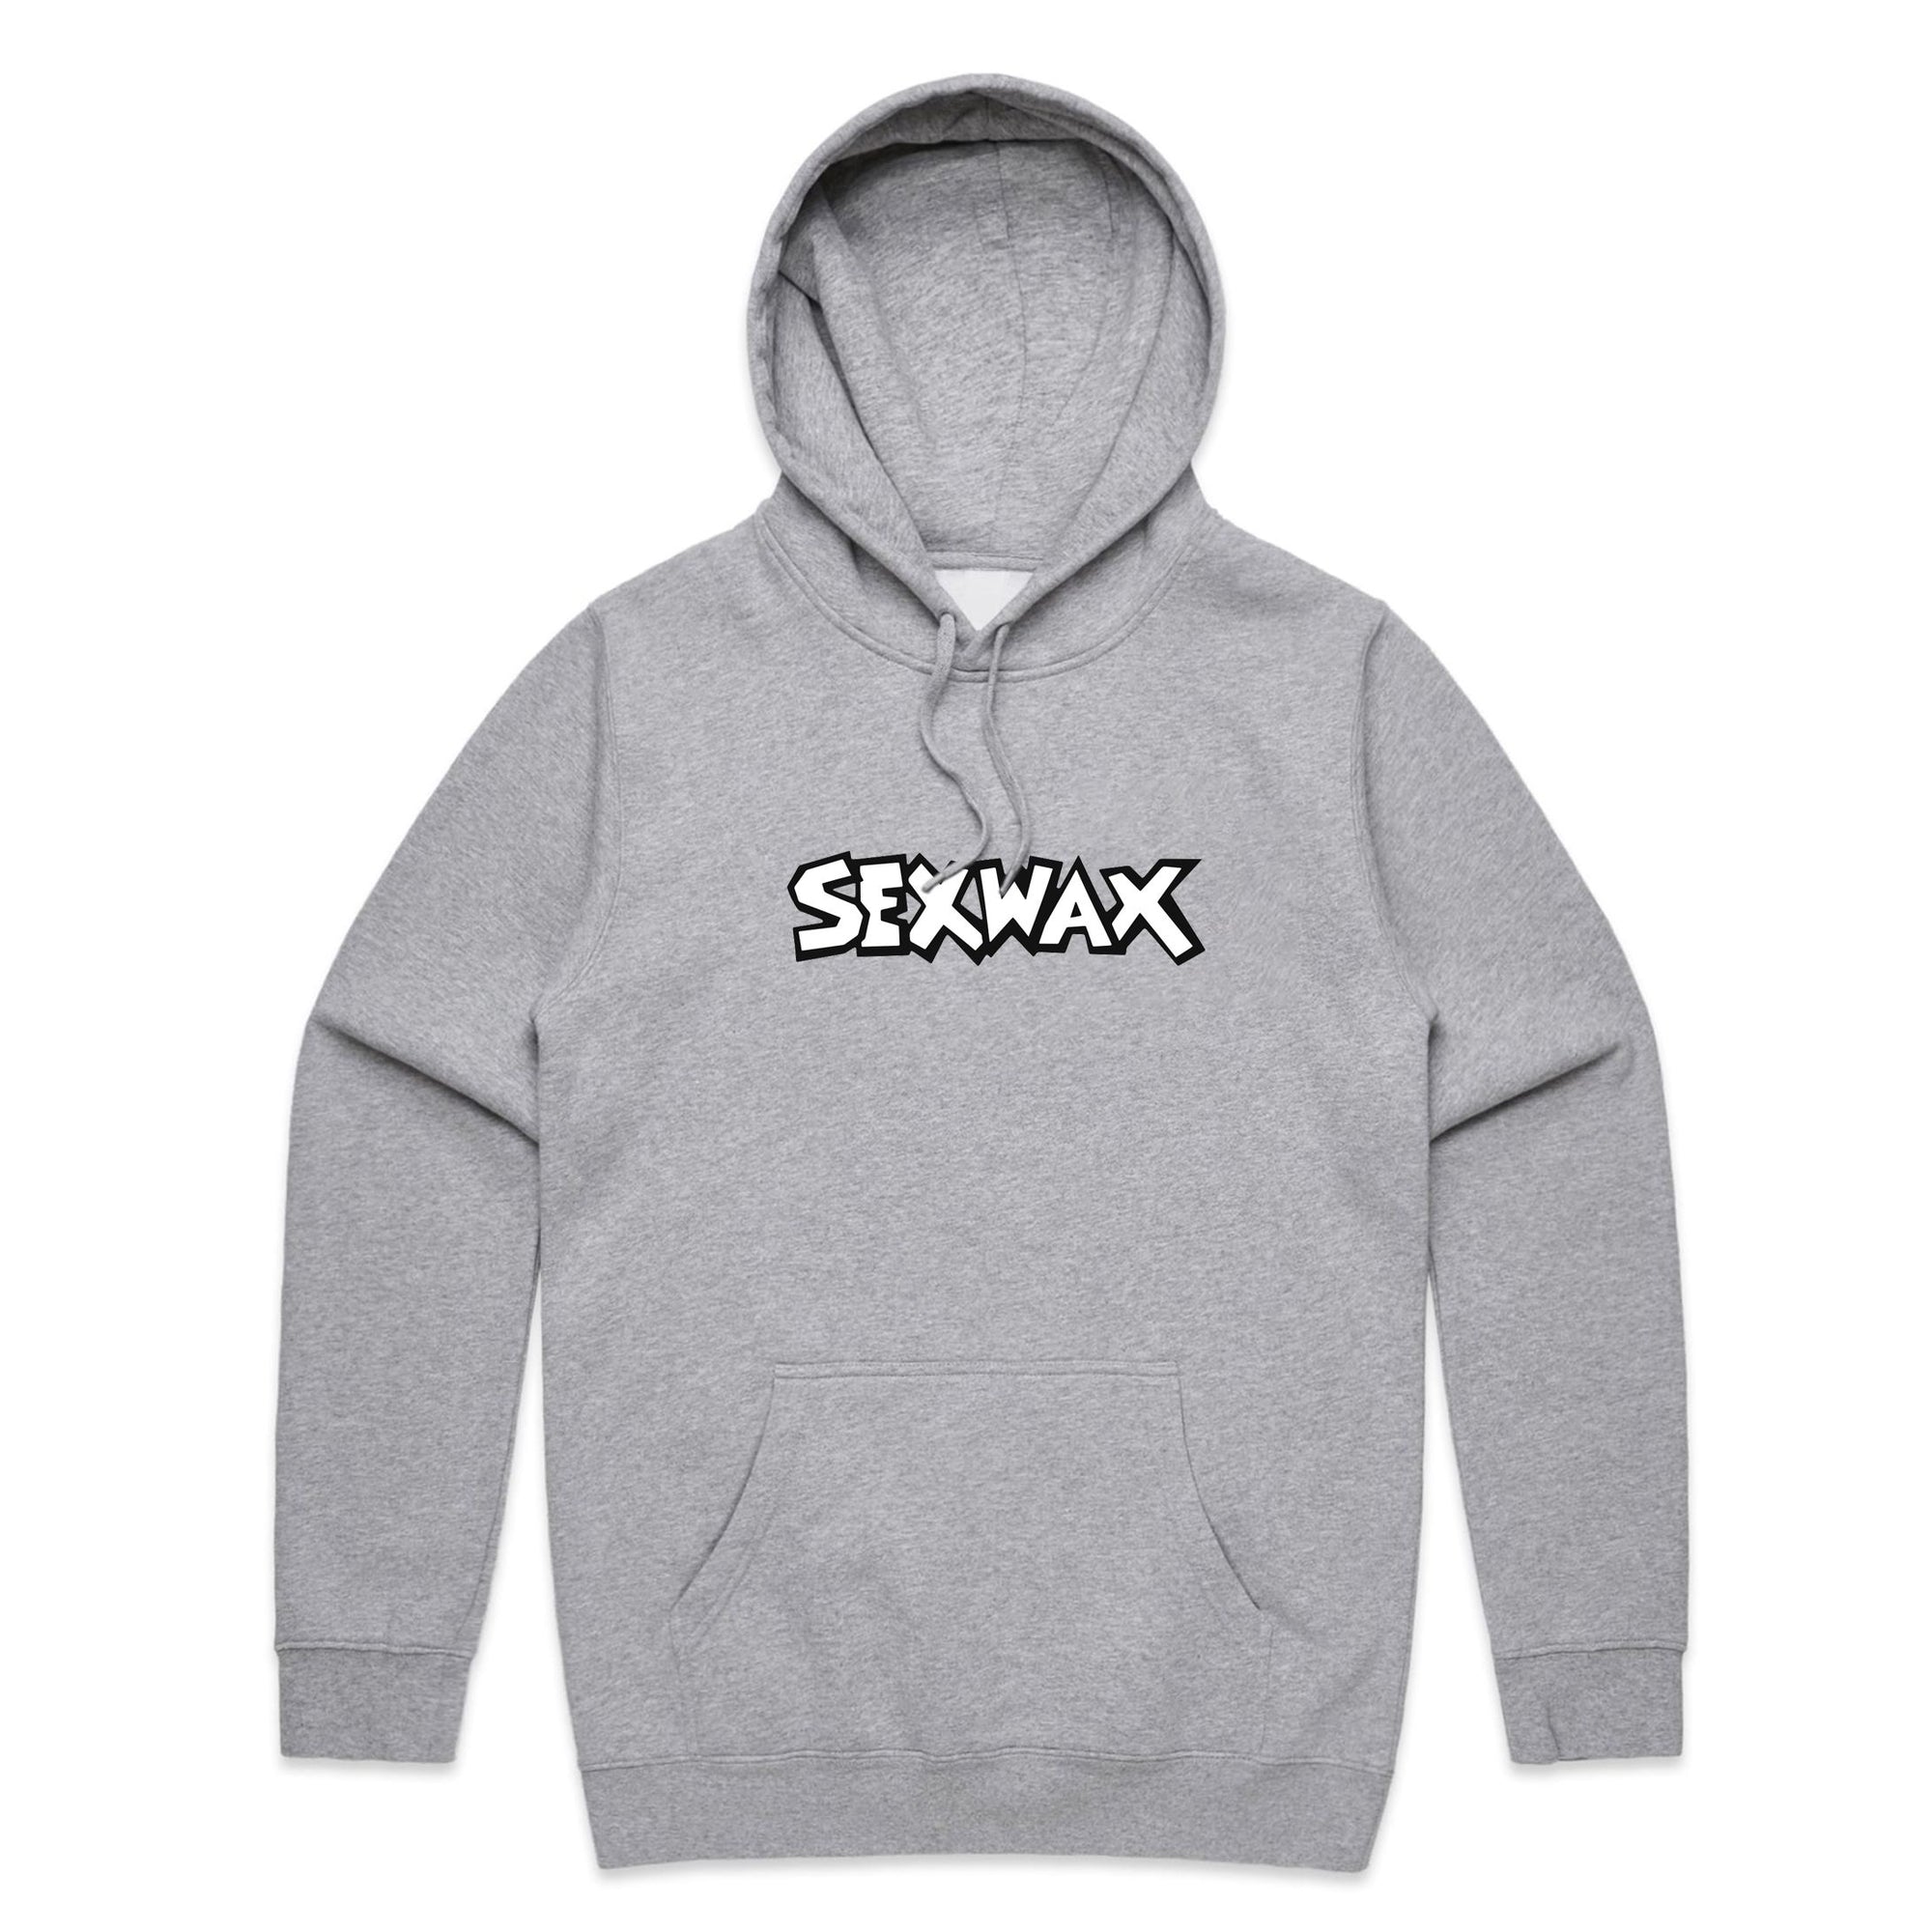 Sexwax Team Word Hooded Pullover Grey